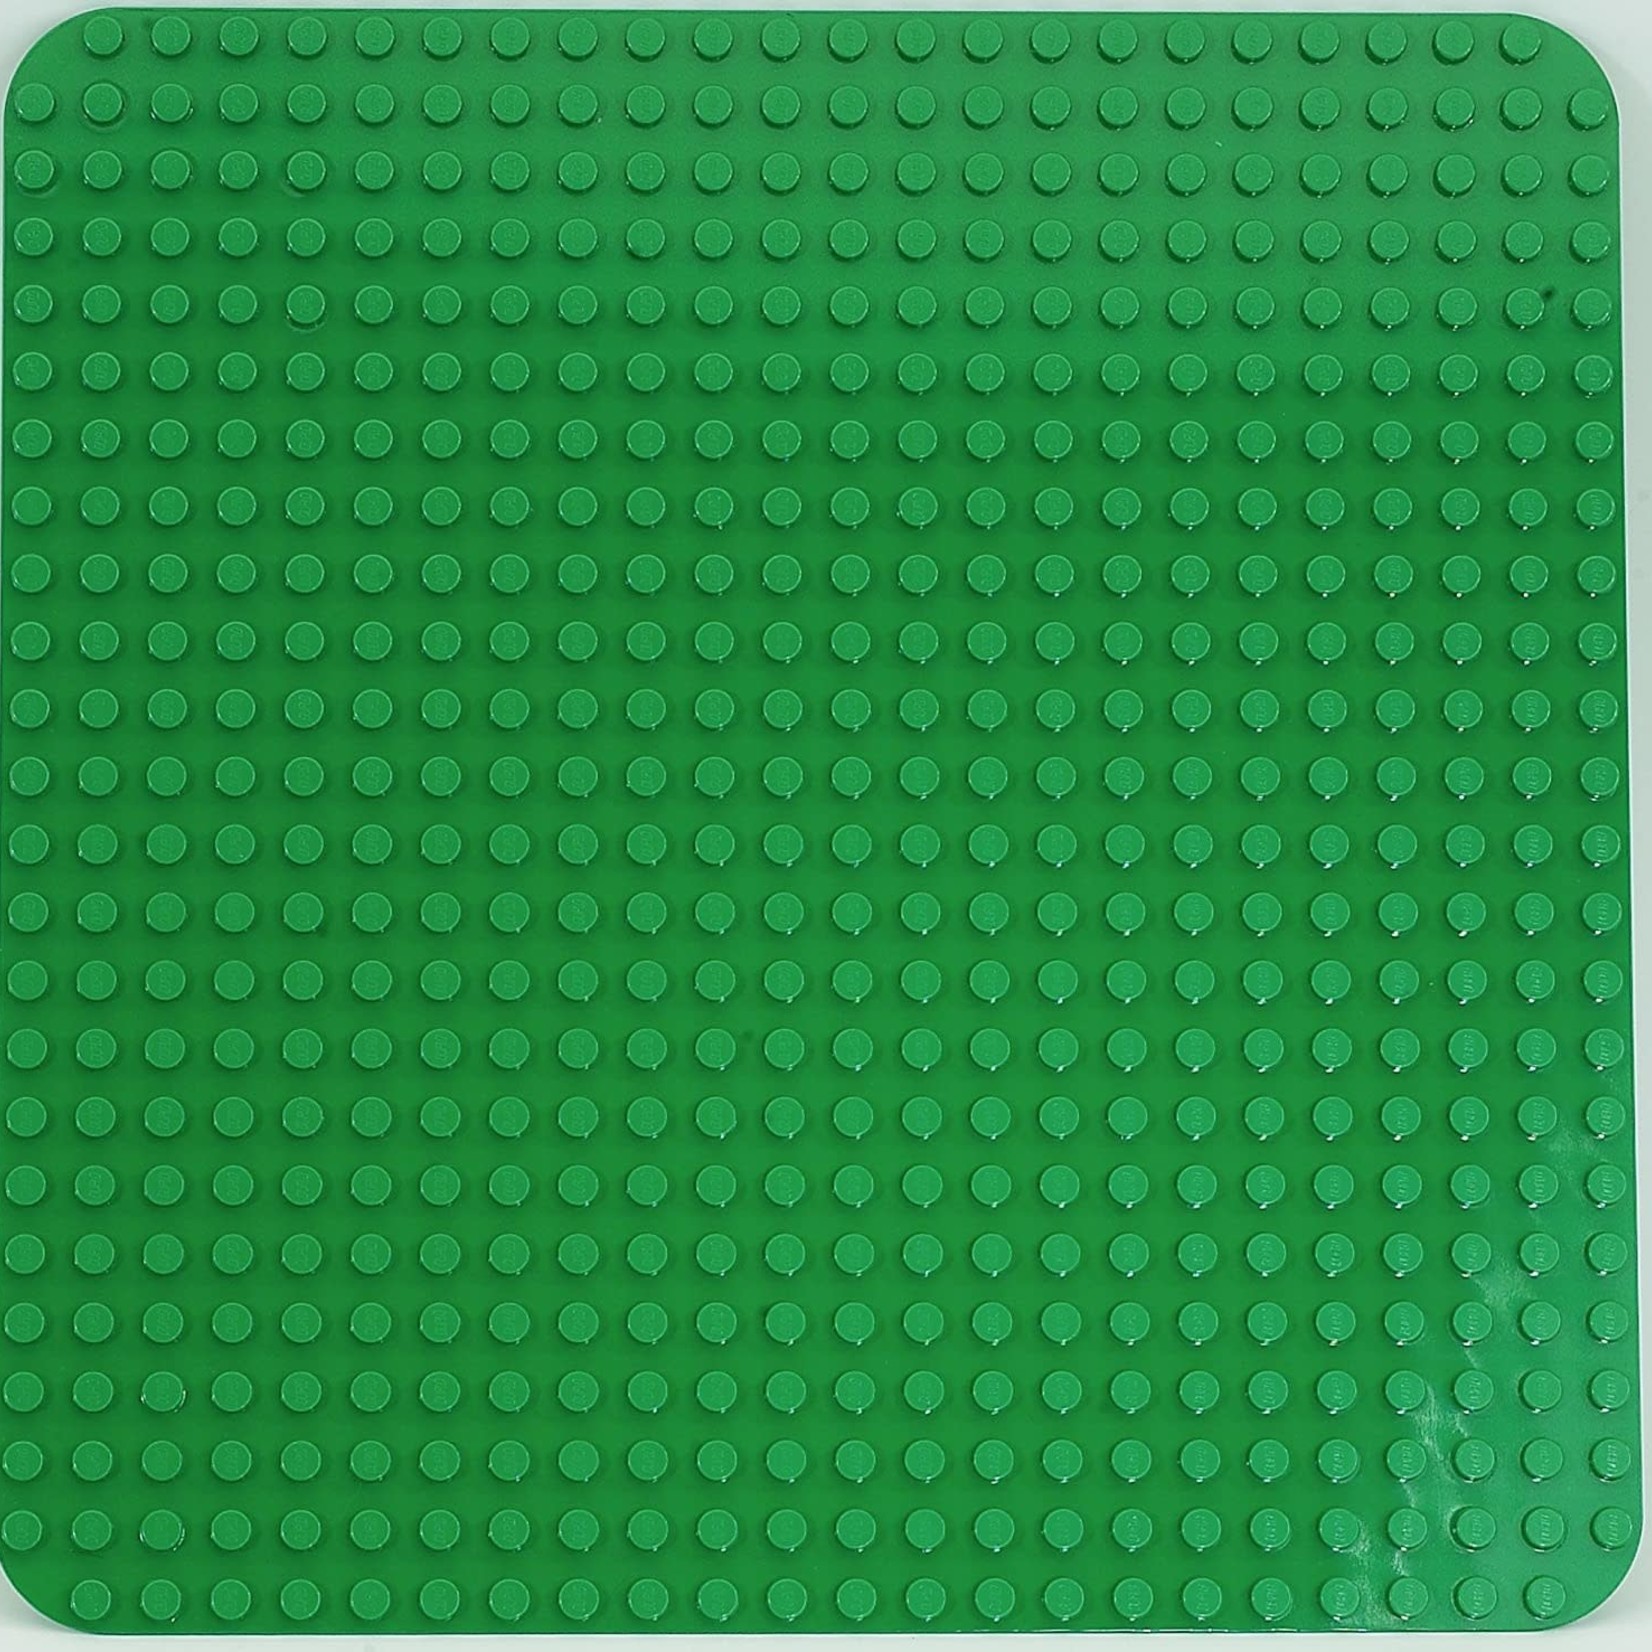 Lego Lego Duplo 2304 - Plaque de base verte